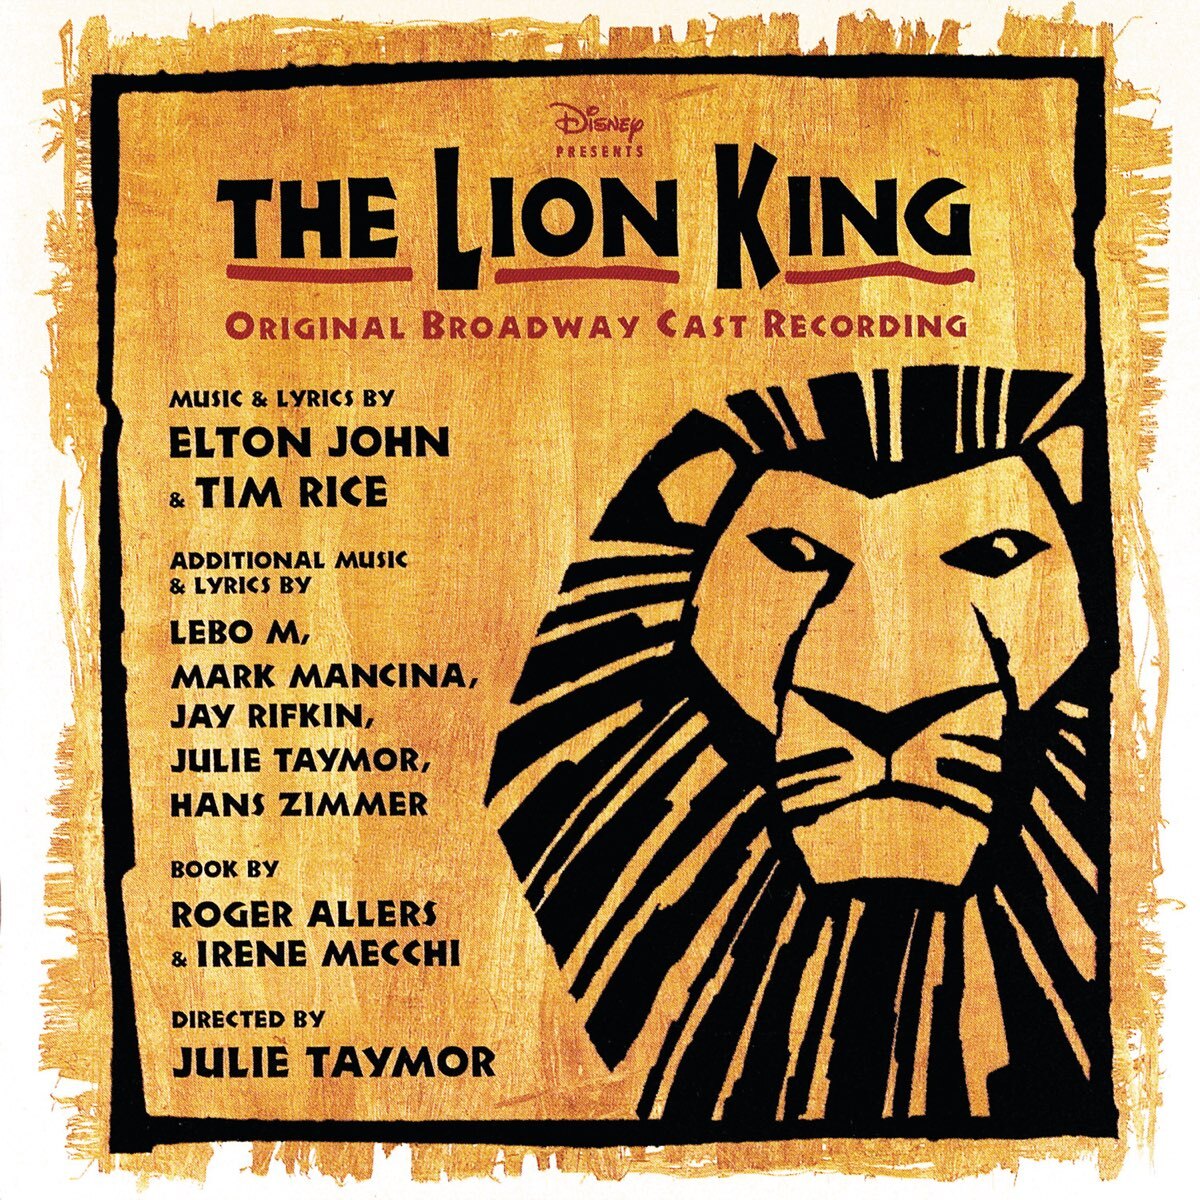 The Lion King cast recording